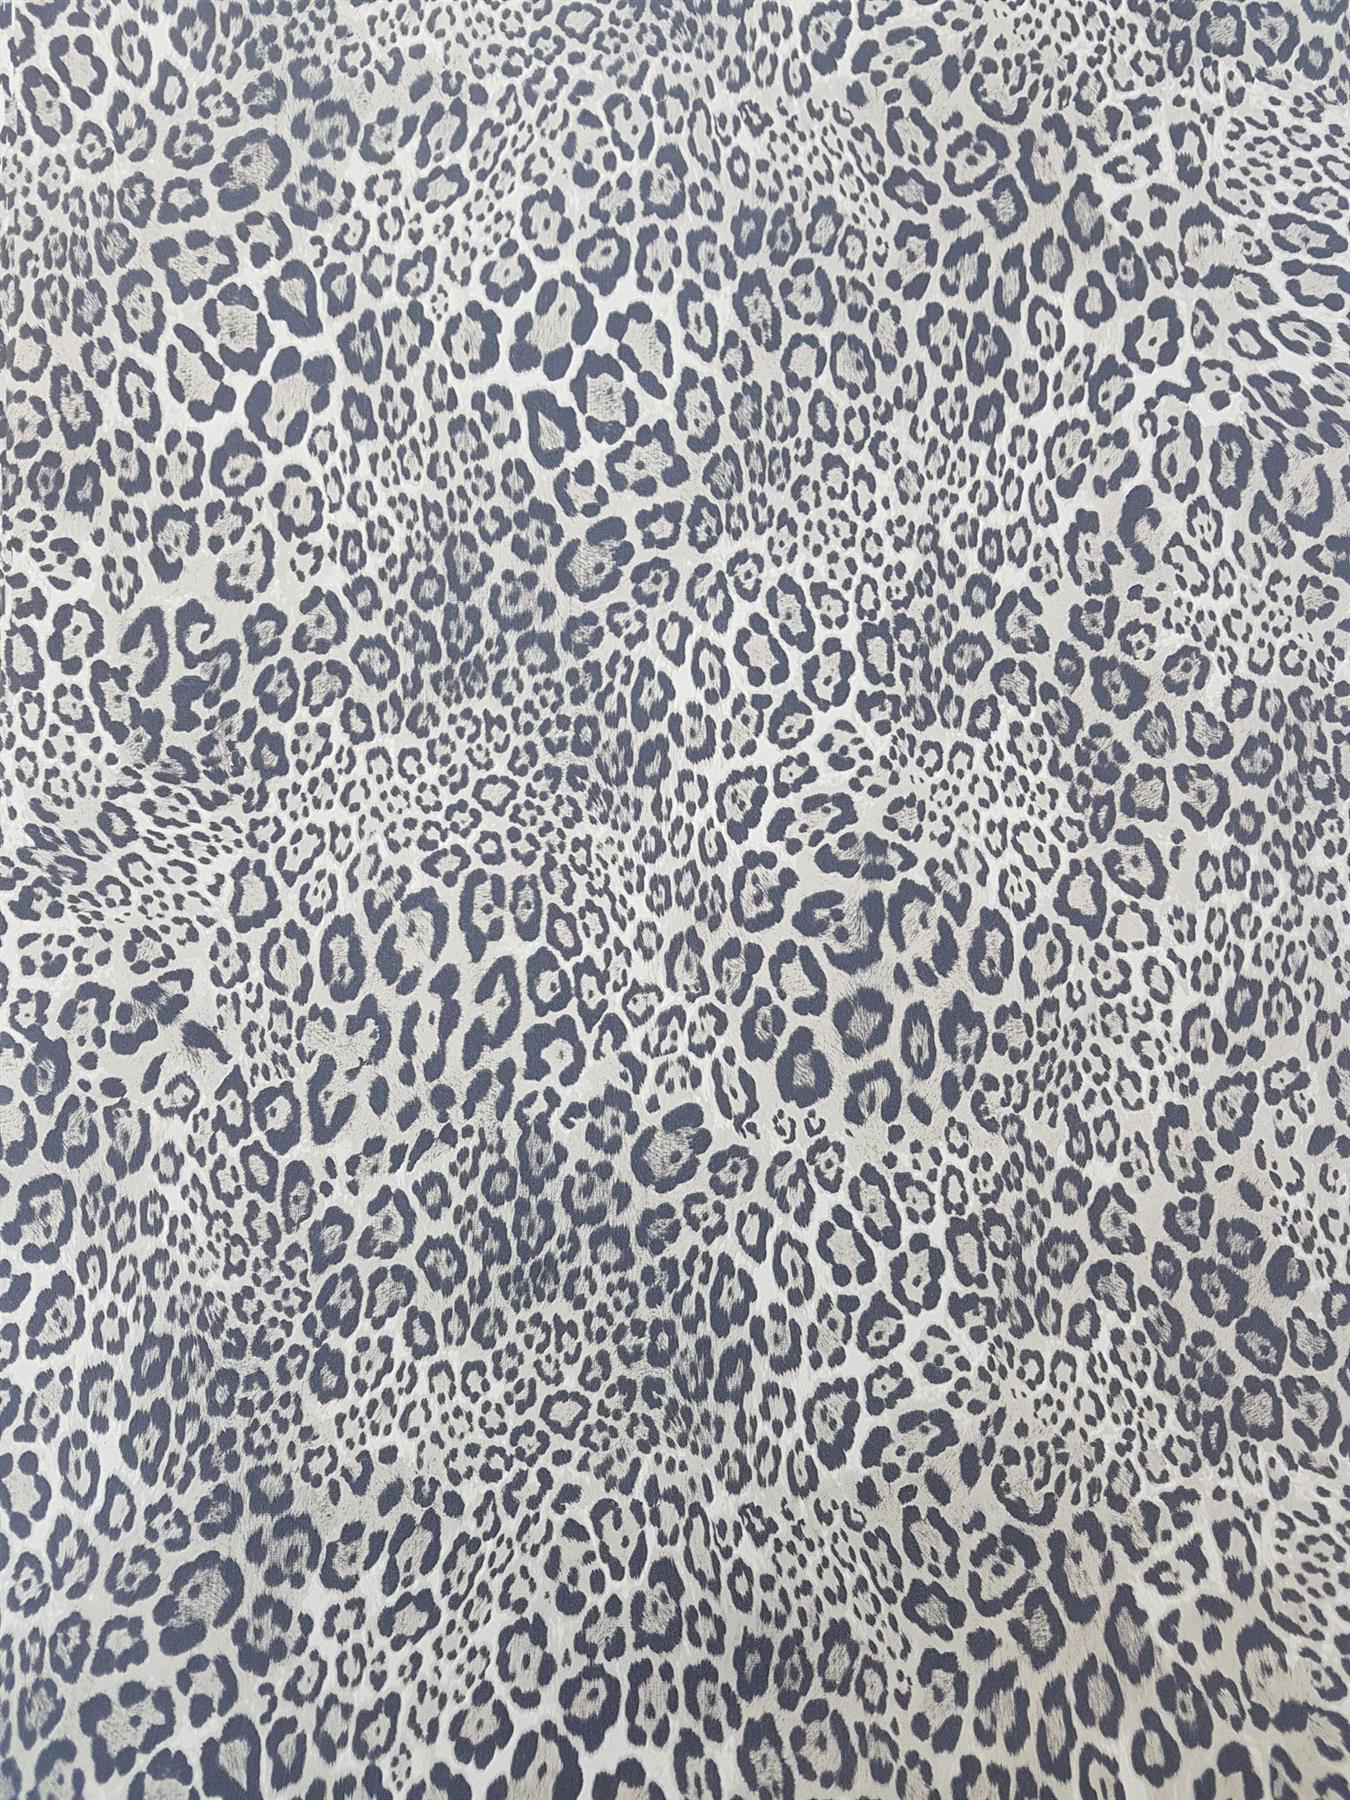 Leopard Print Wallpaper Uk - HD Wallpaper 